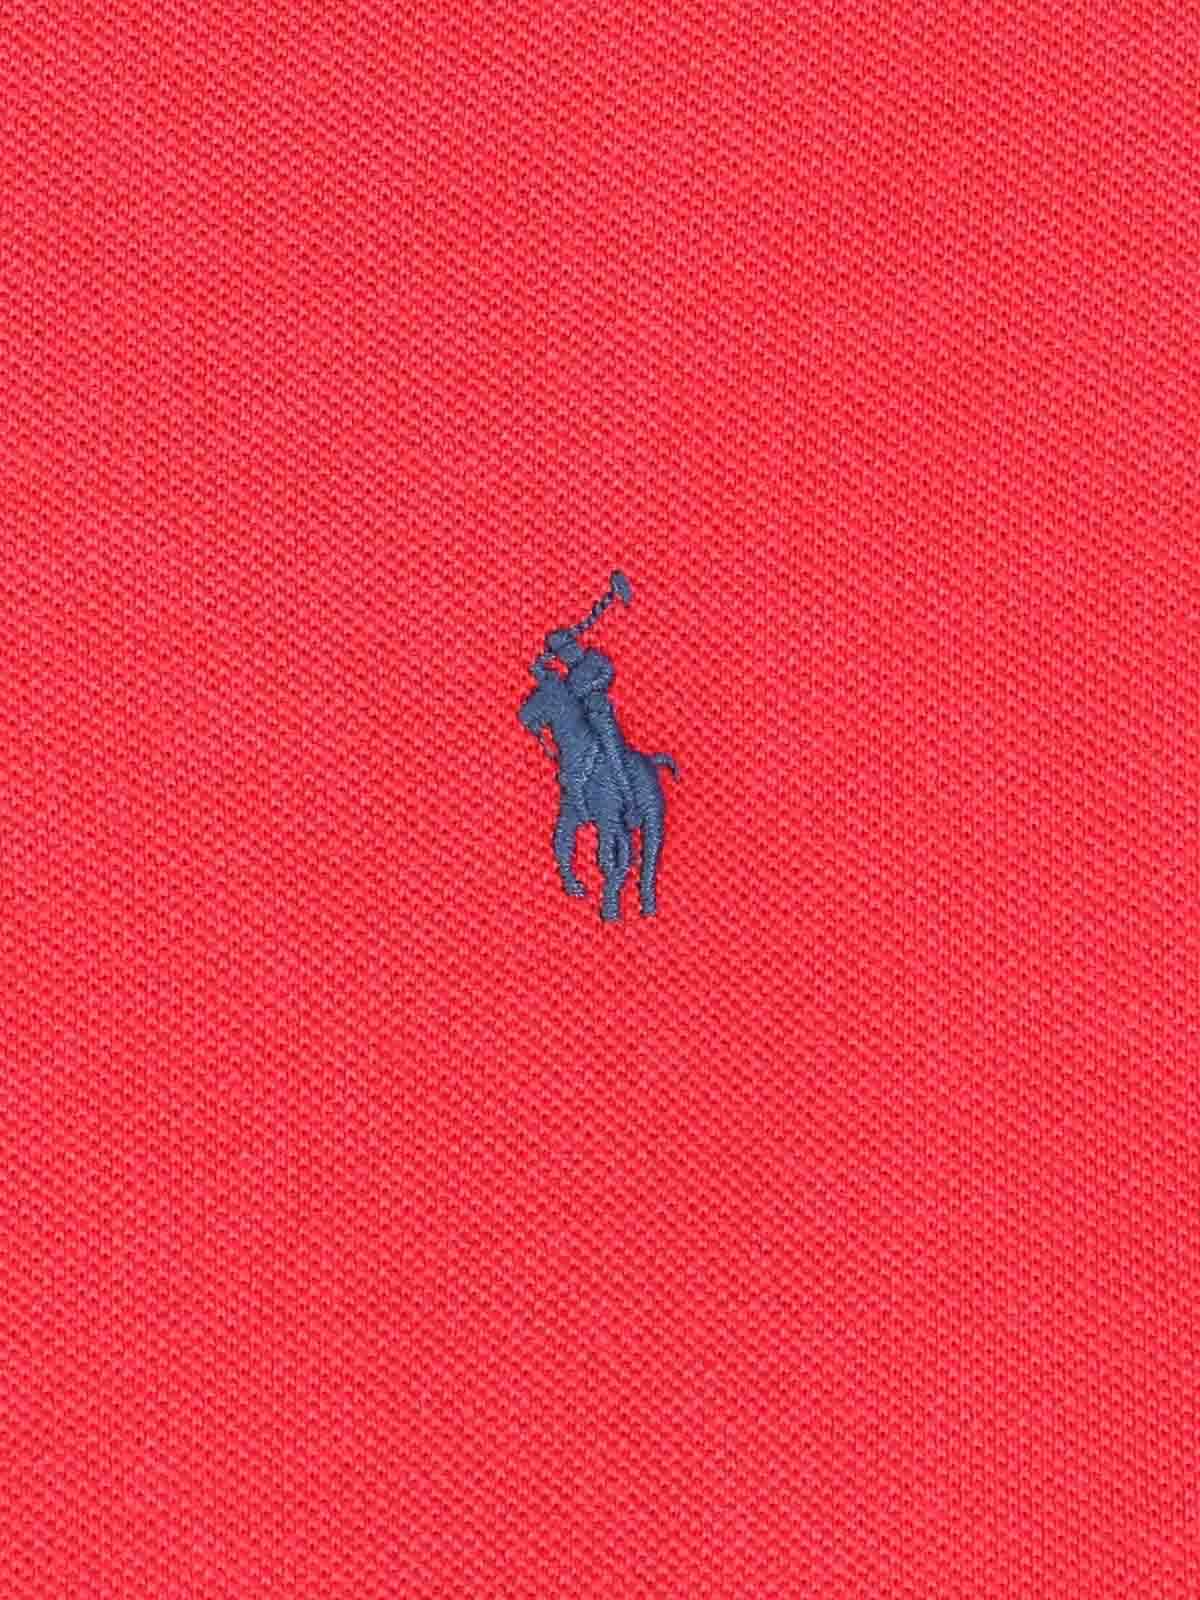 Polo Red by Ralph Lauren - Buy online